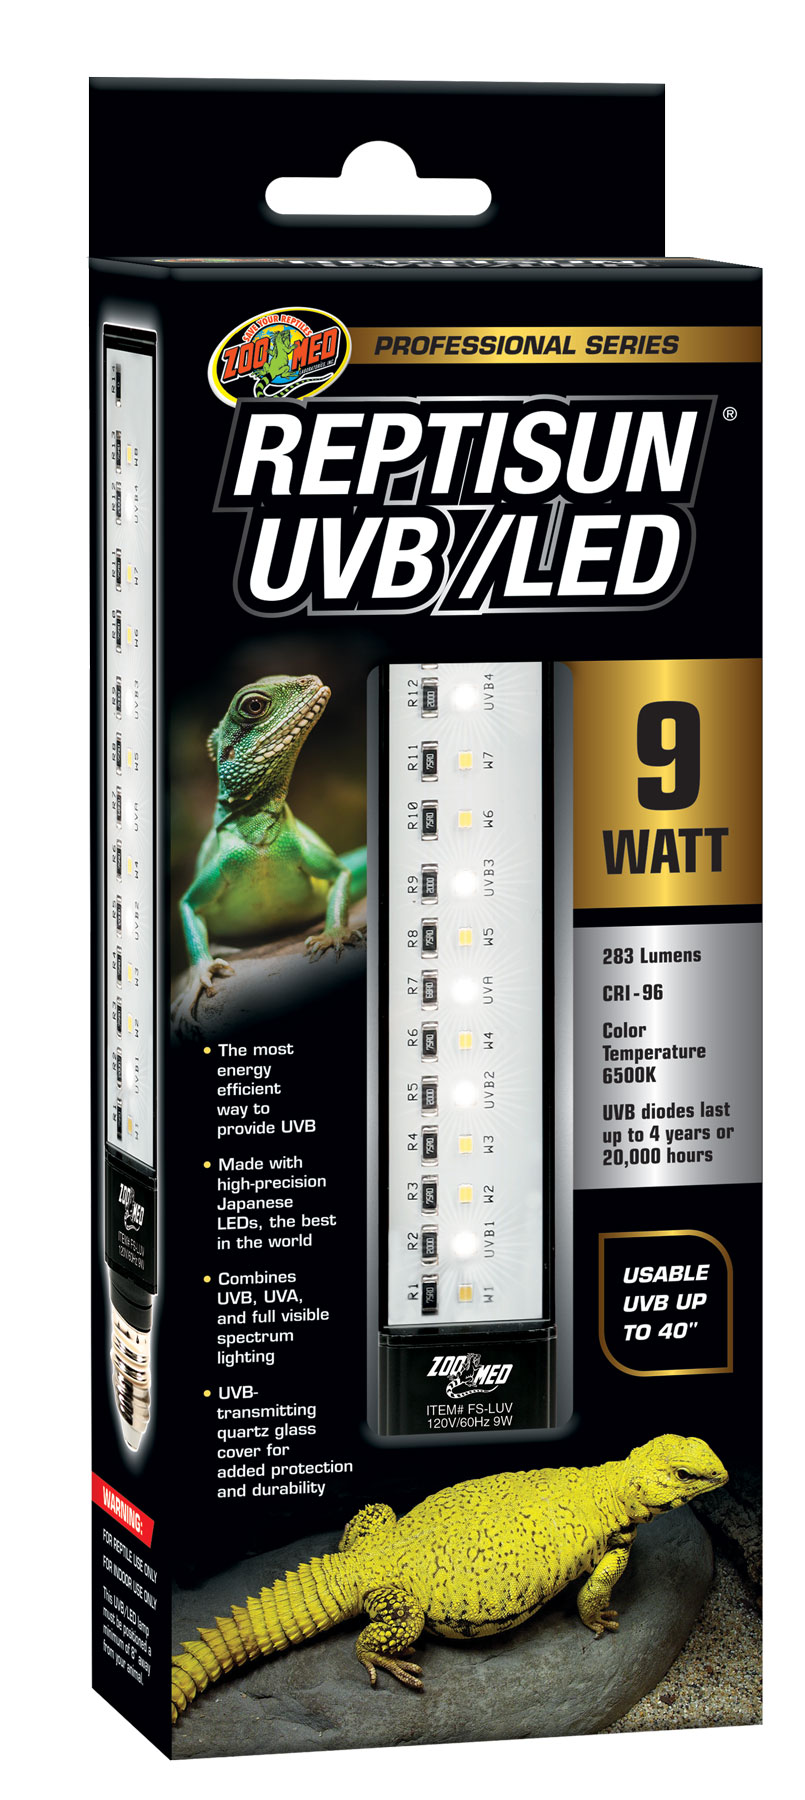 ReptiSun® UVB/LED | Zoo Med Inc.